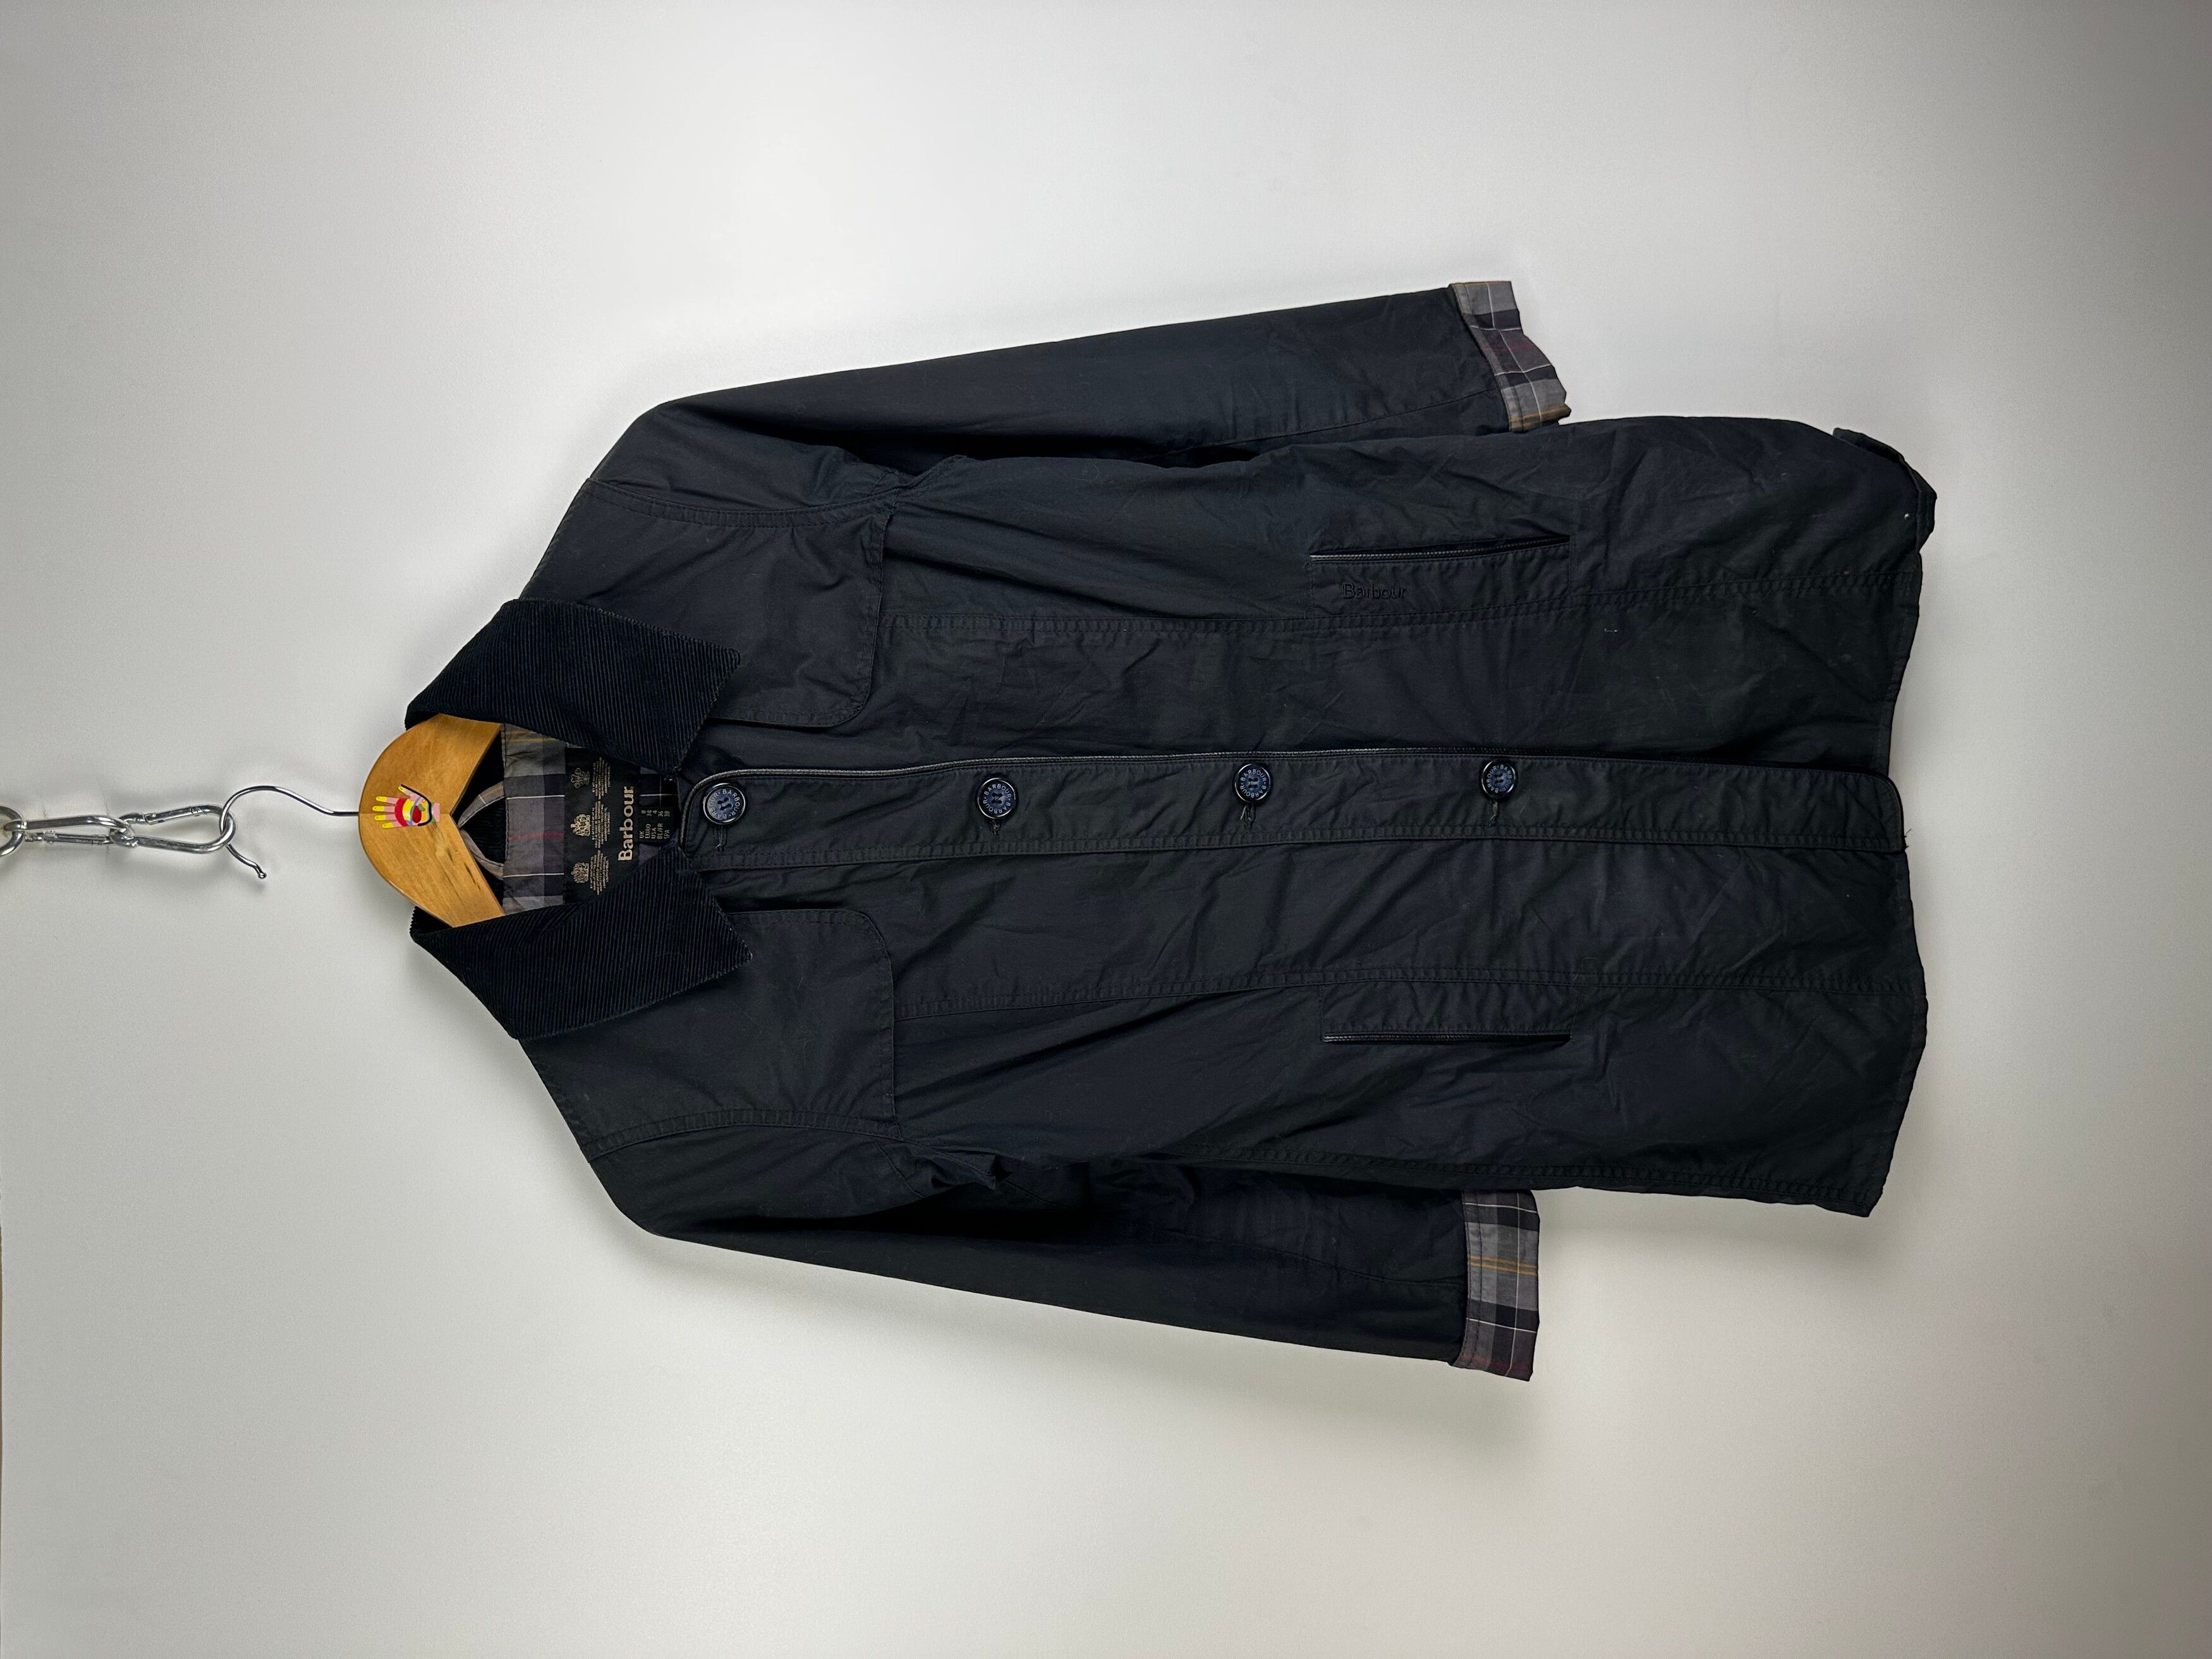 Barbour Women’s Barbour Grasmoor Waxed Jacket Coat Black Size US4 Size S / US 4 / IT 40 - 1 Preview